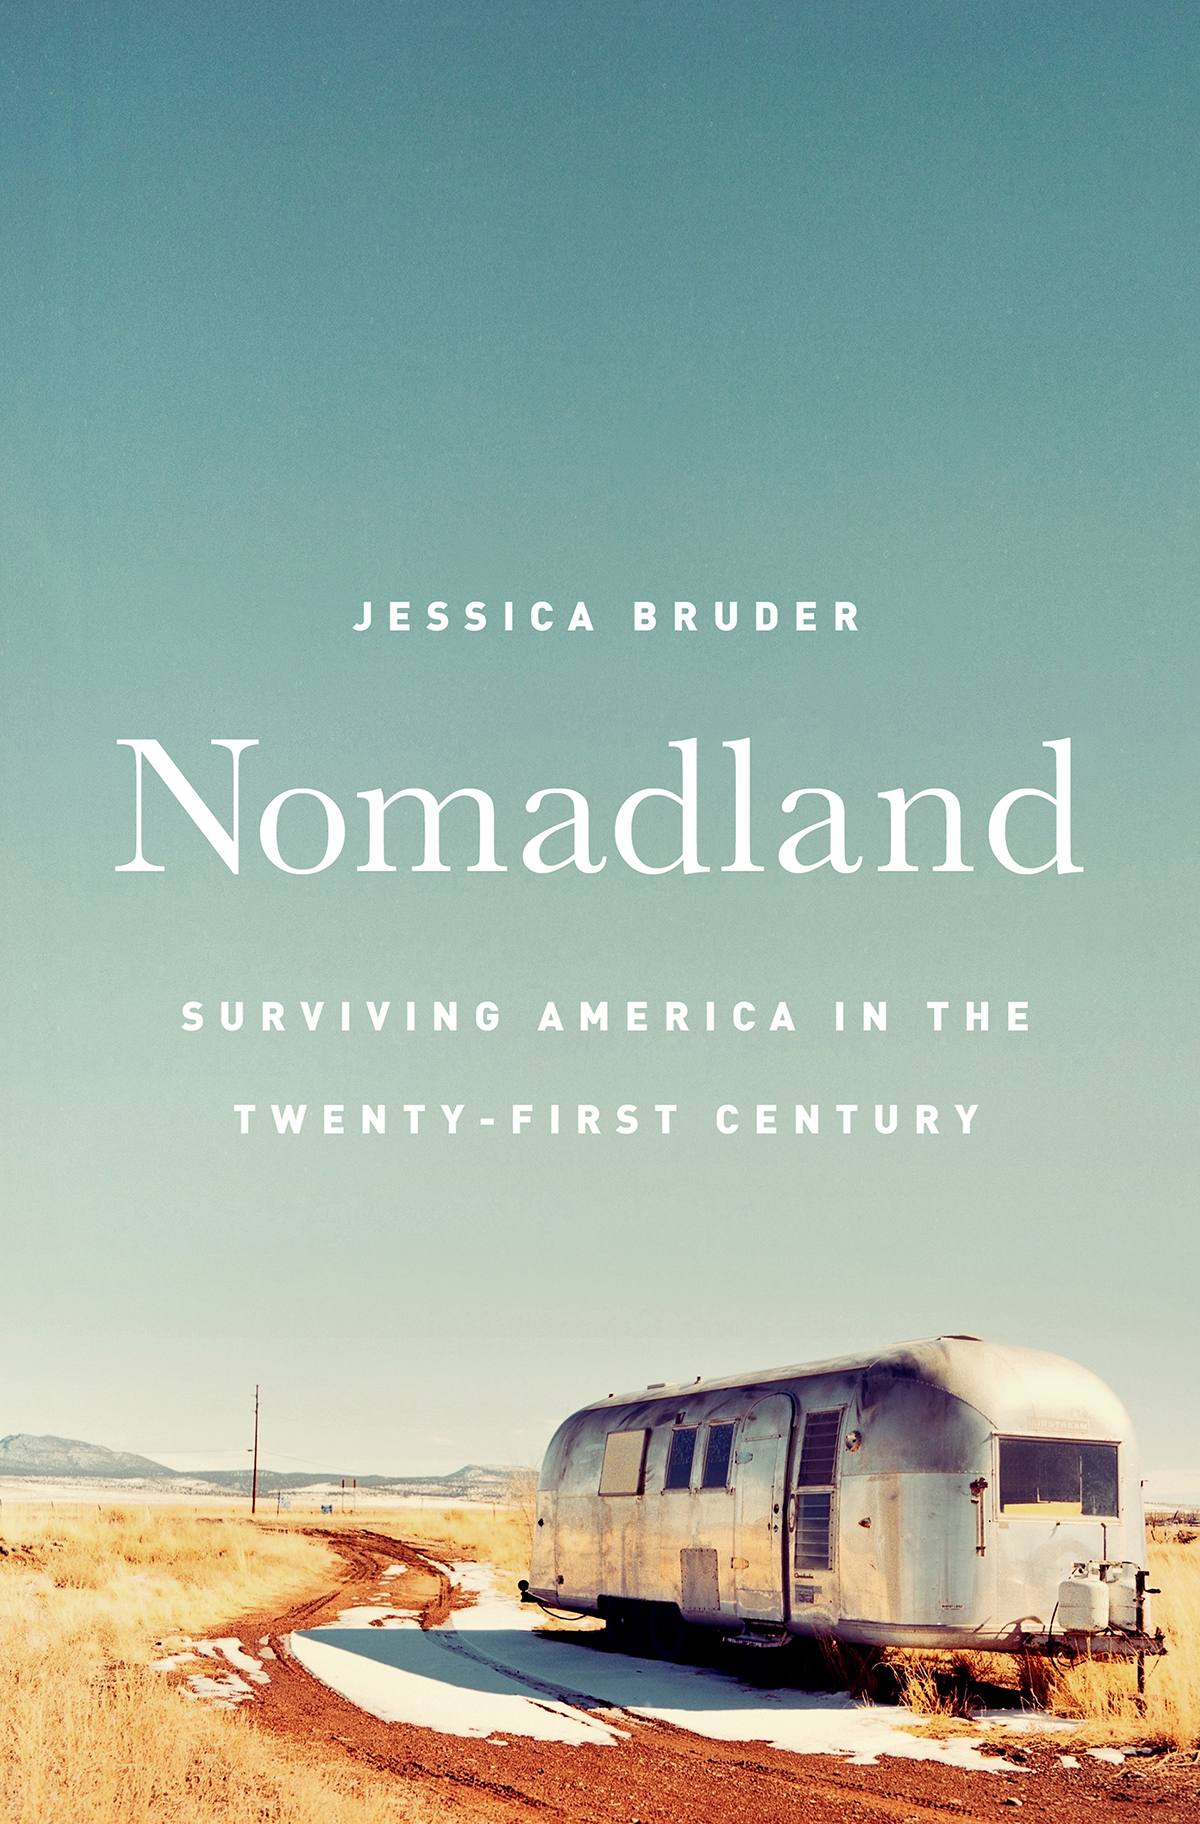 Nomadland SURVIVING AMERICA IN THE TWENTY-FIRST CENTURY JESSICA BRUDER - photo 1